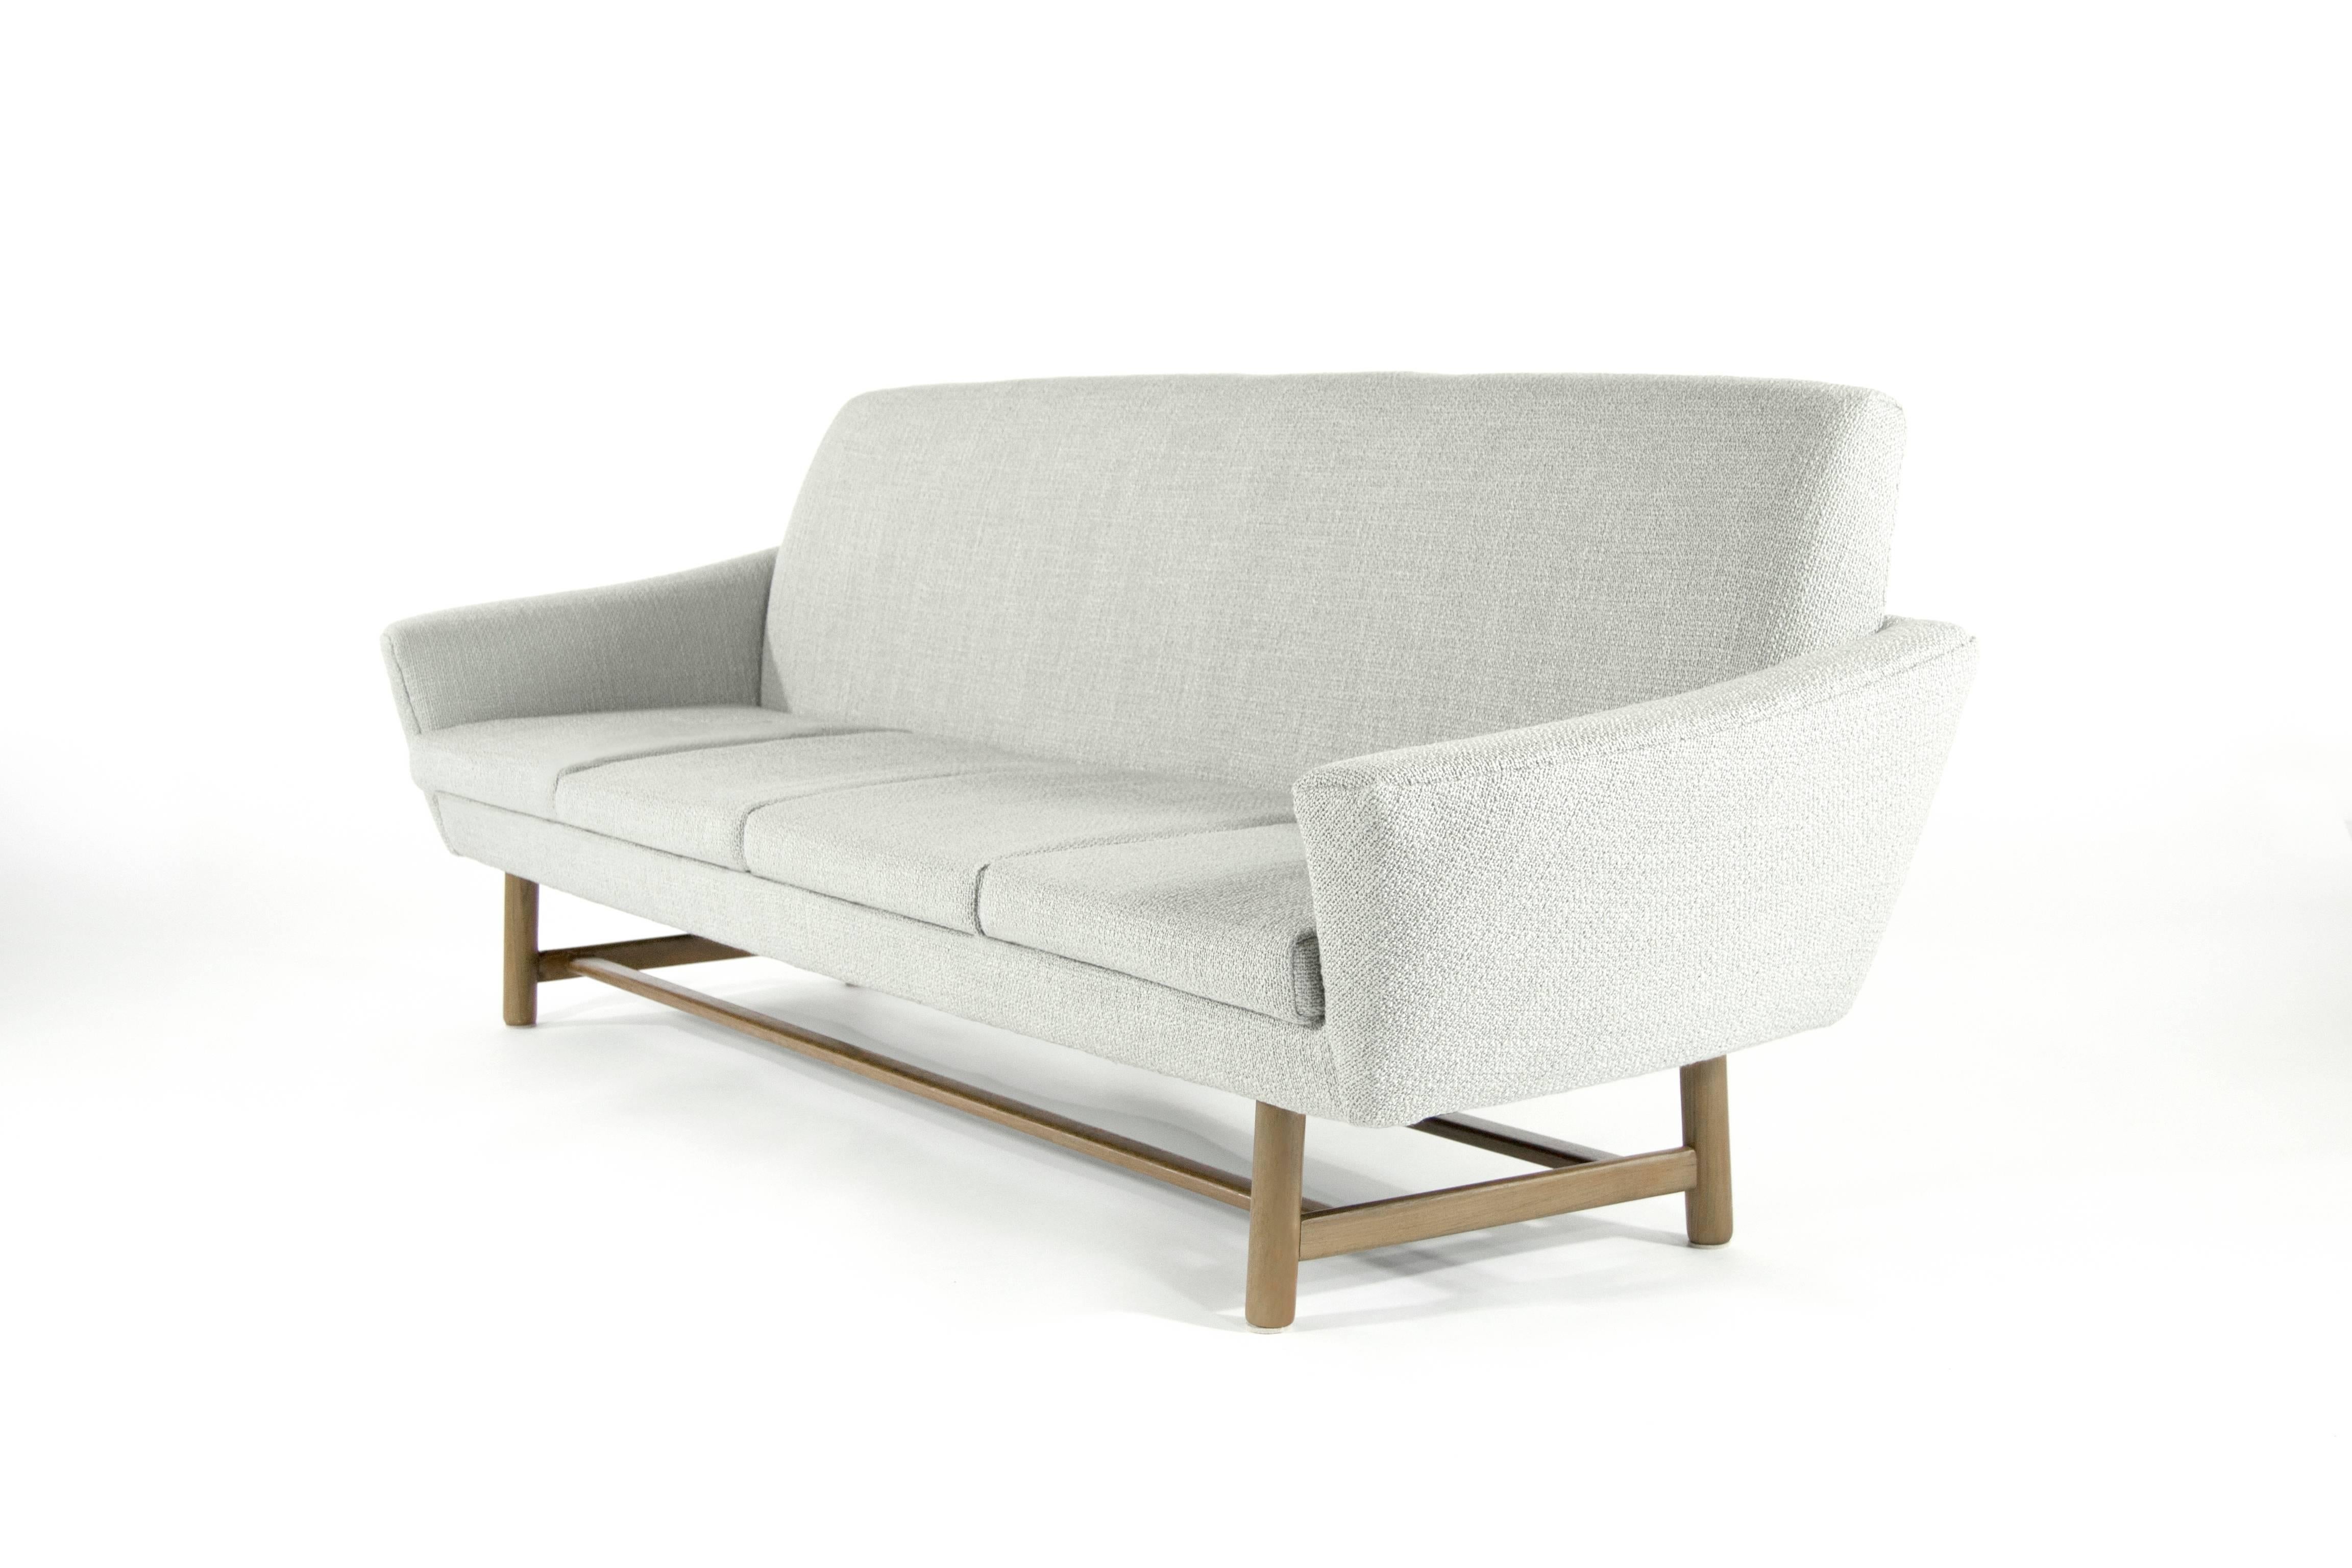 Danish Modern floating sofa, newly upholstered in grey tweed. Sculptural teak base fully restored.